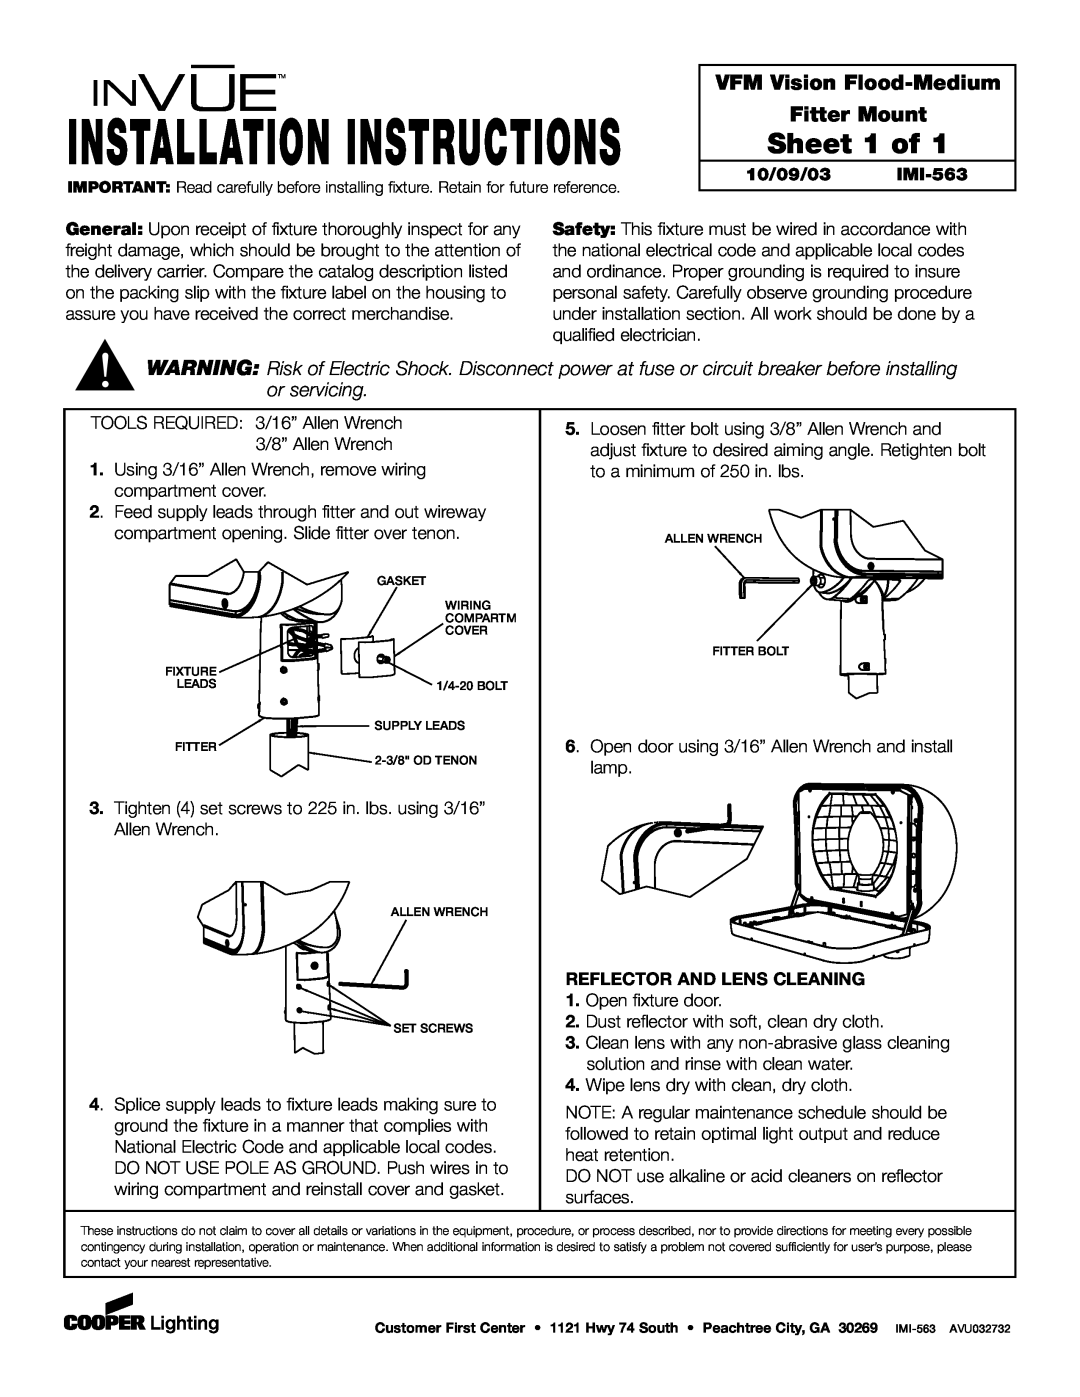 Cooper Lighting installation instructions Installation Instructions, Sheet 1 of, 10/09/03 IMI-563 